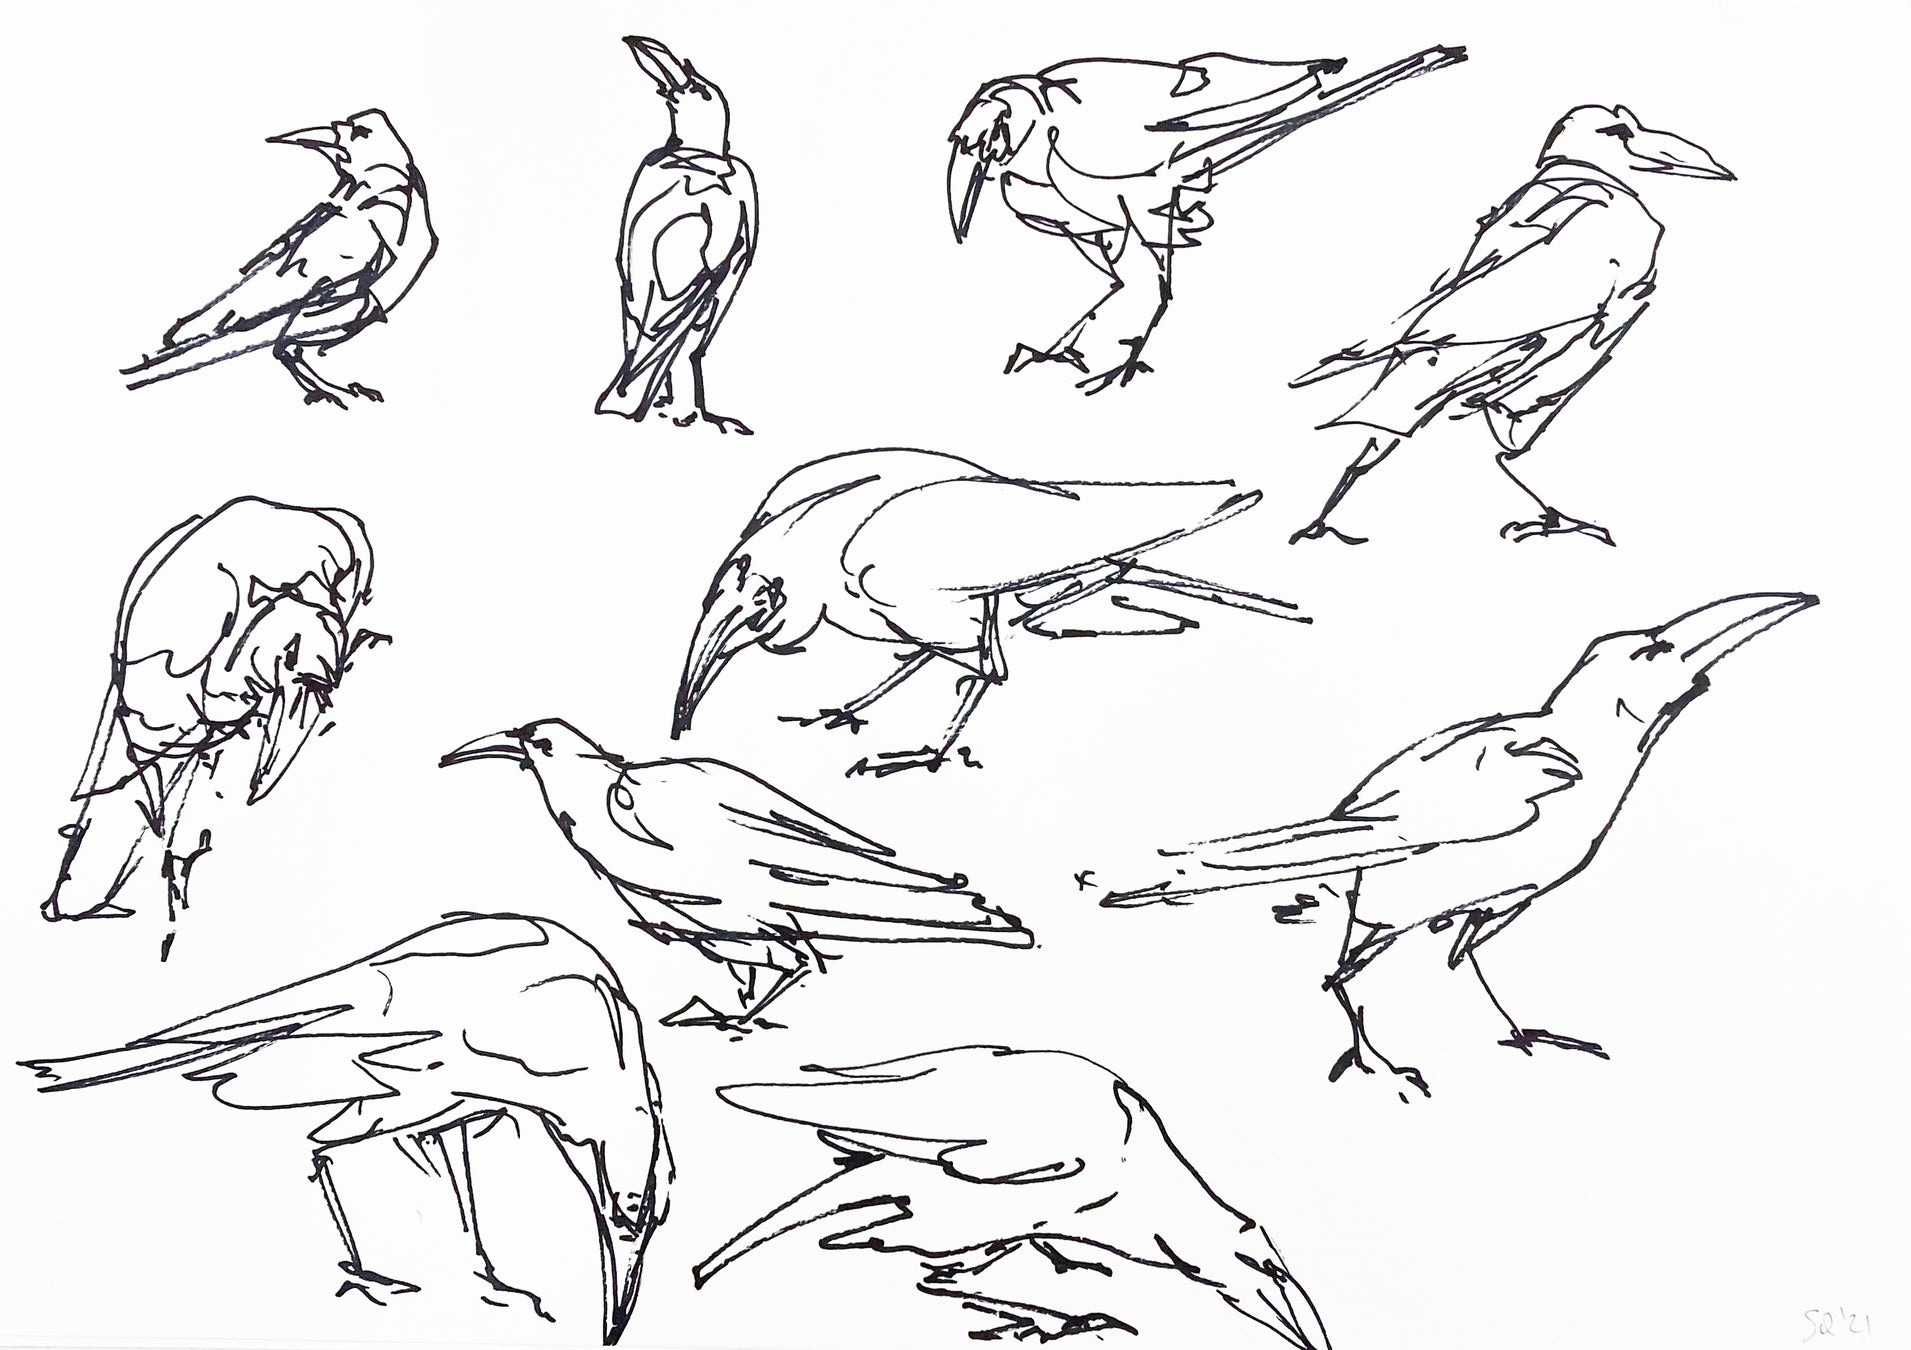 Crow sketch © Stephanie Quayle Courtesy of Gallery38